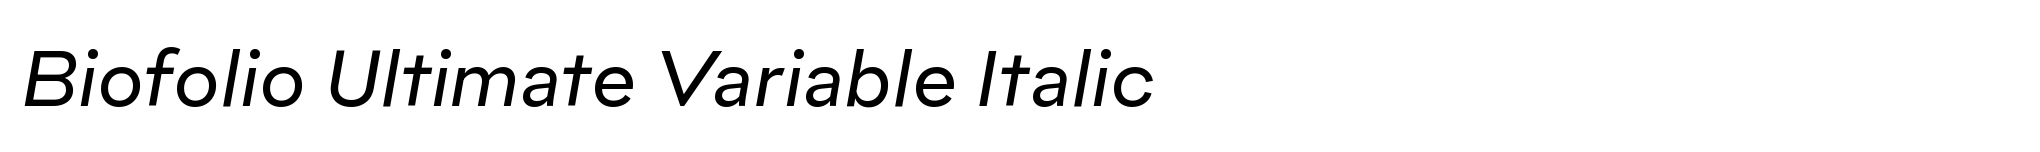 Biofolio Ultimate Variable Italic image